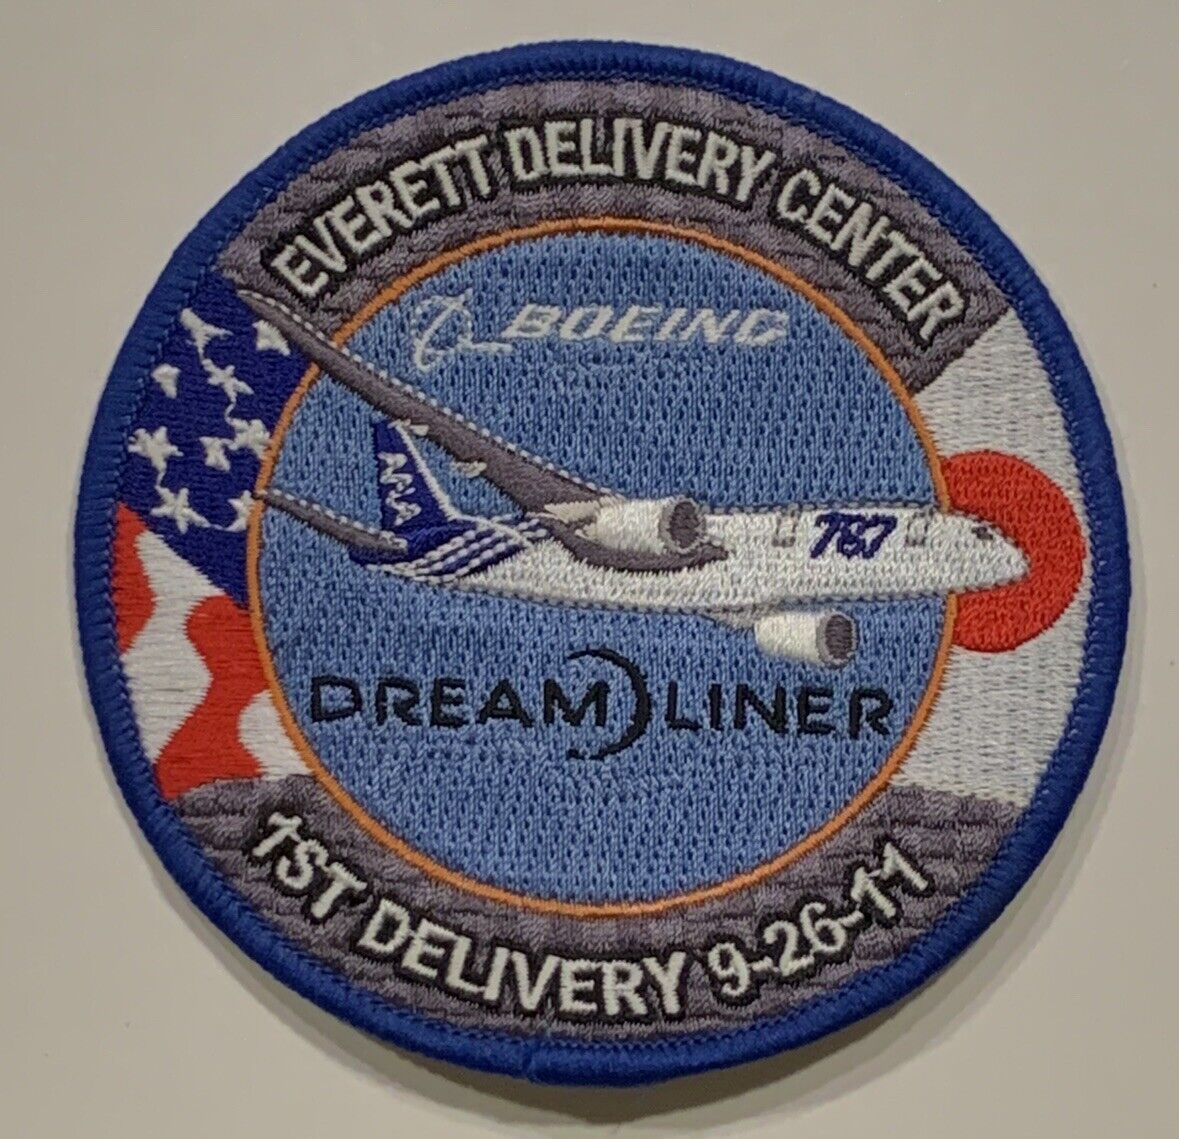 PATCH: 9-26-11 BOEING 787 Dreamliner - 1st Delivery - Everett Delivery Center